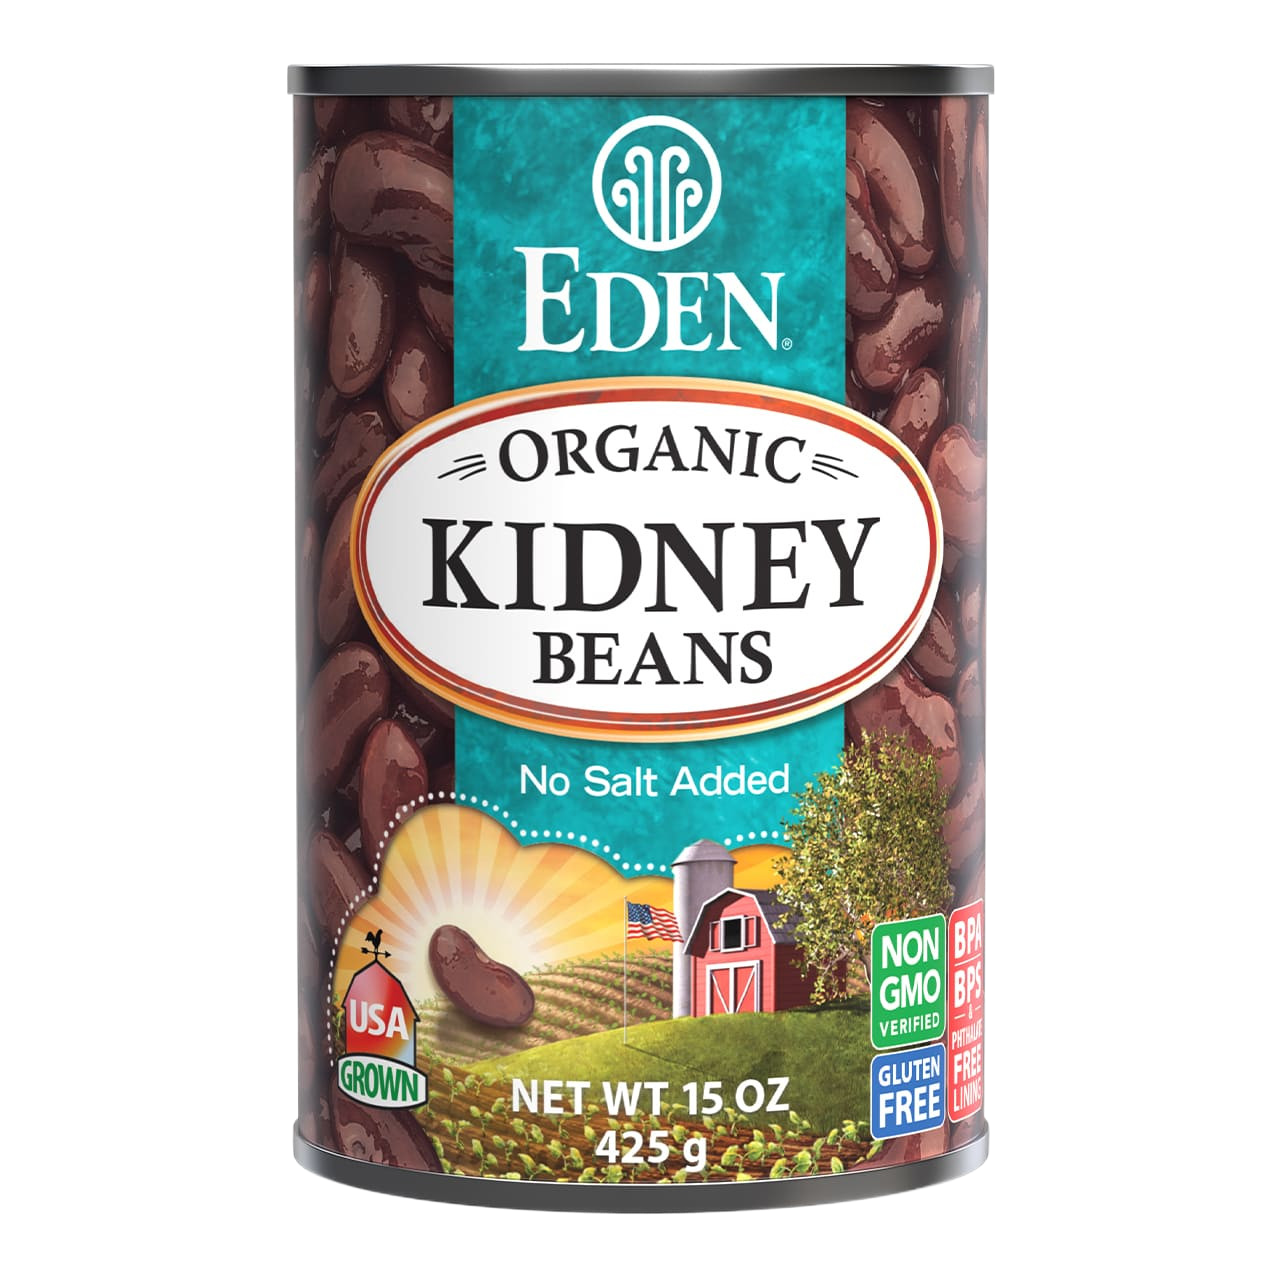 Organic Kidney Beans - 15 OZ